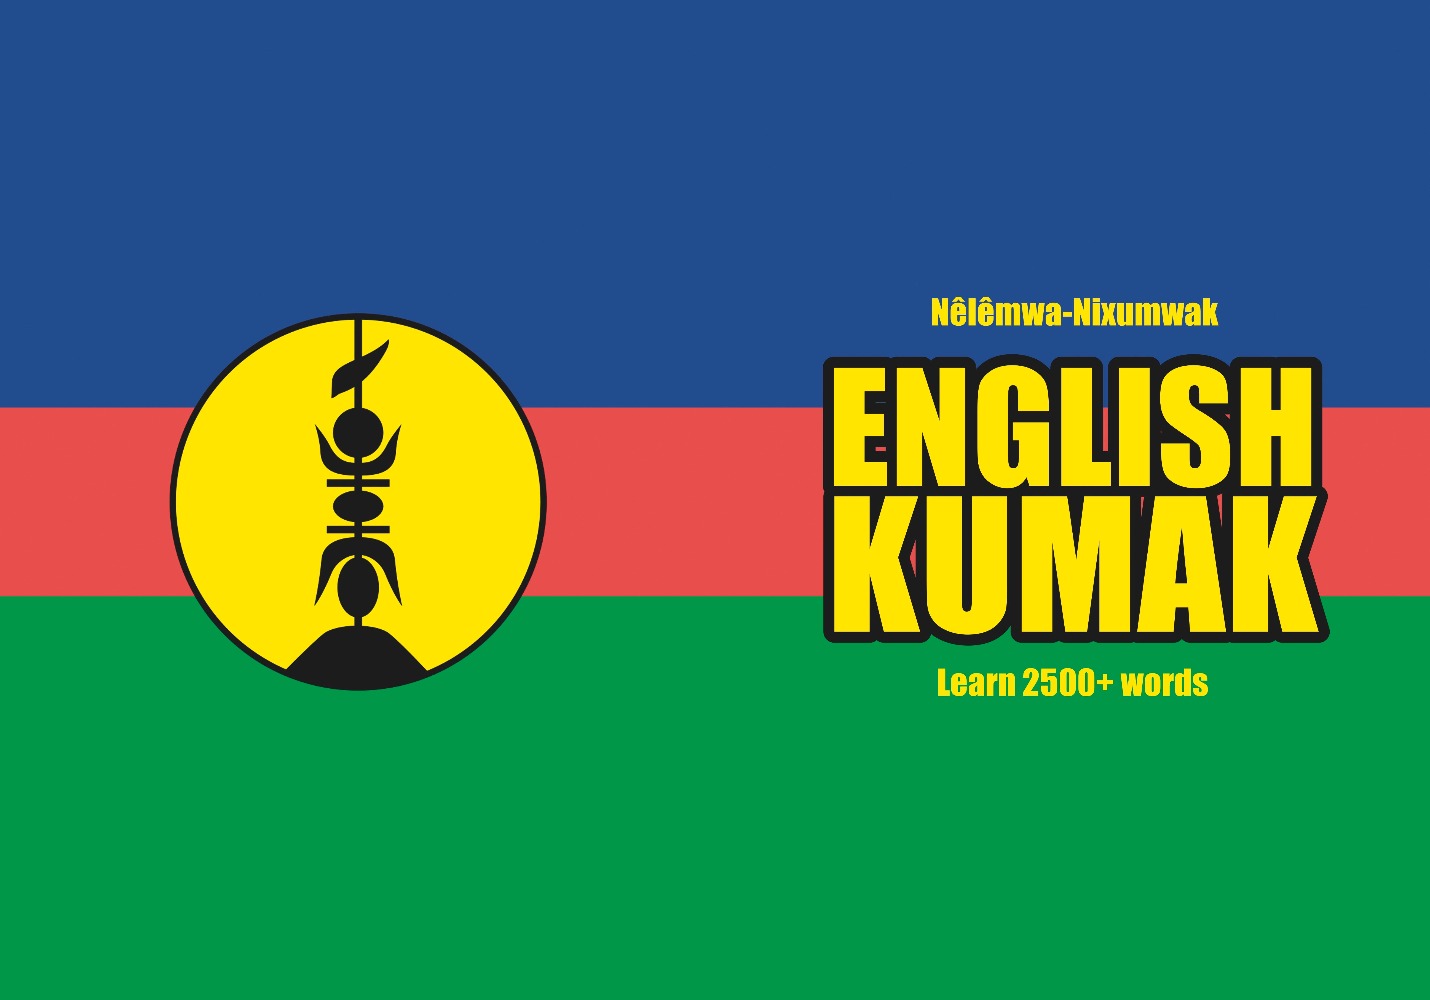 Kumak language learning notebook cover